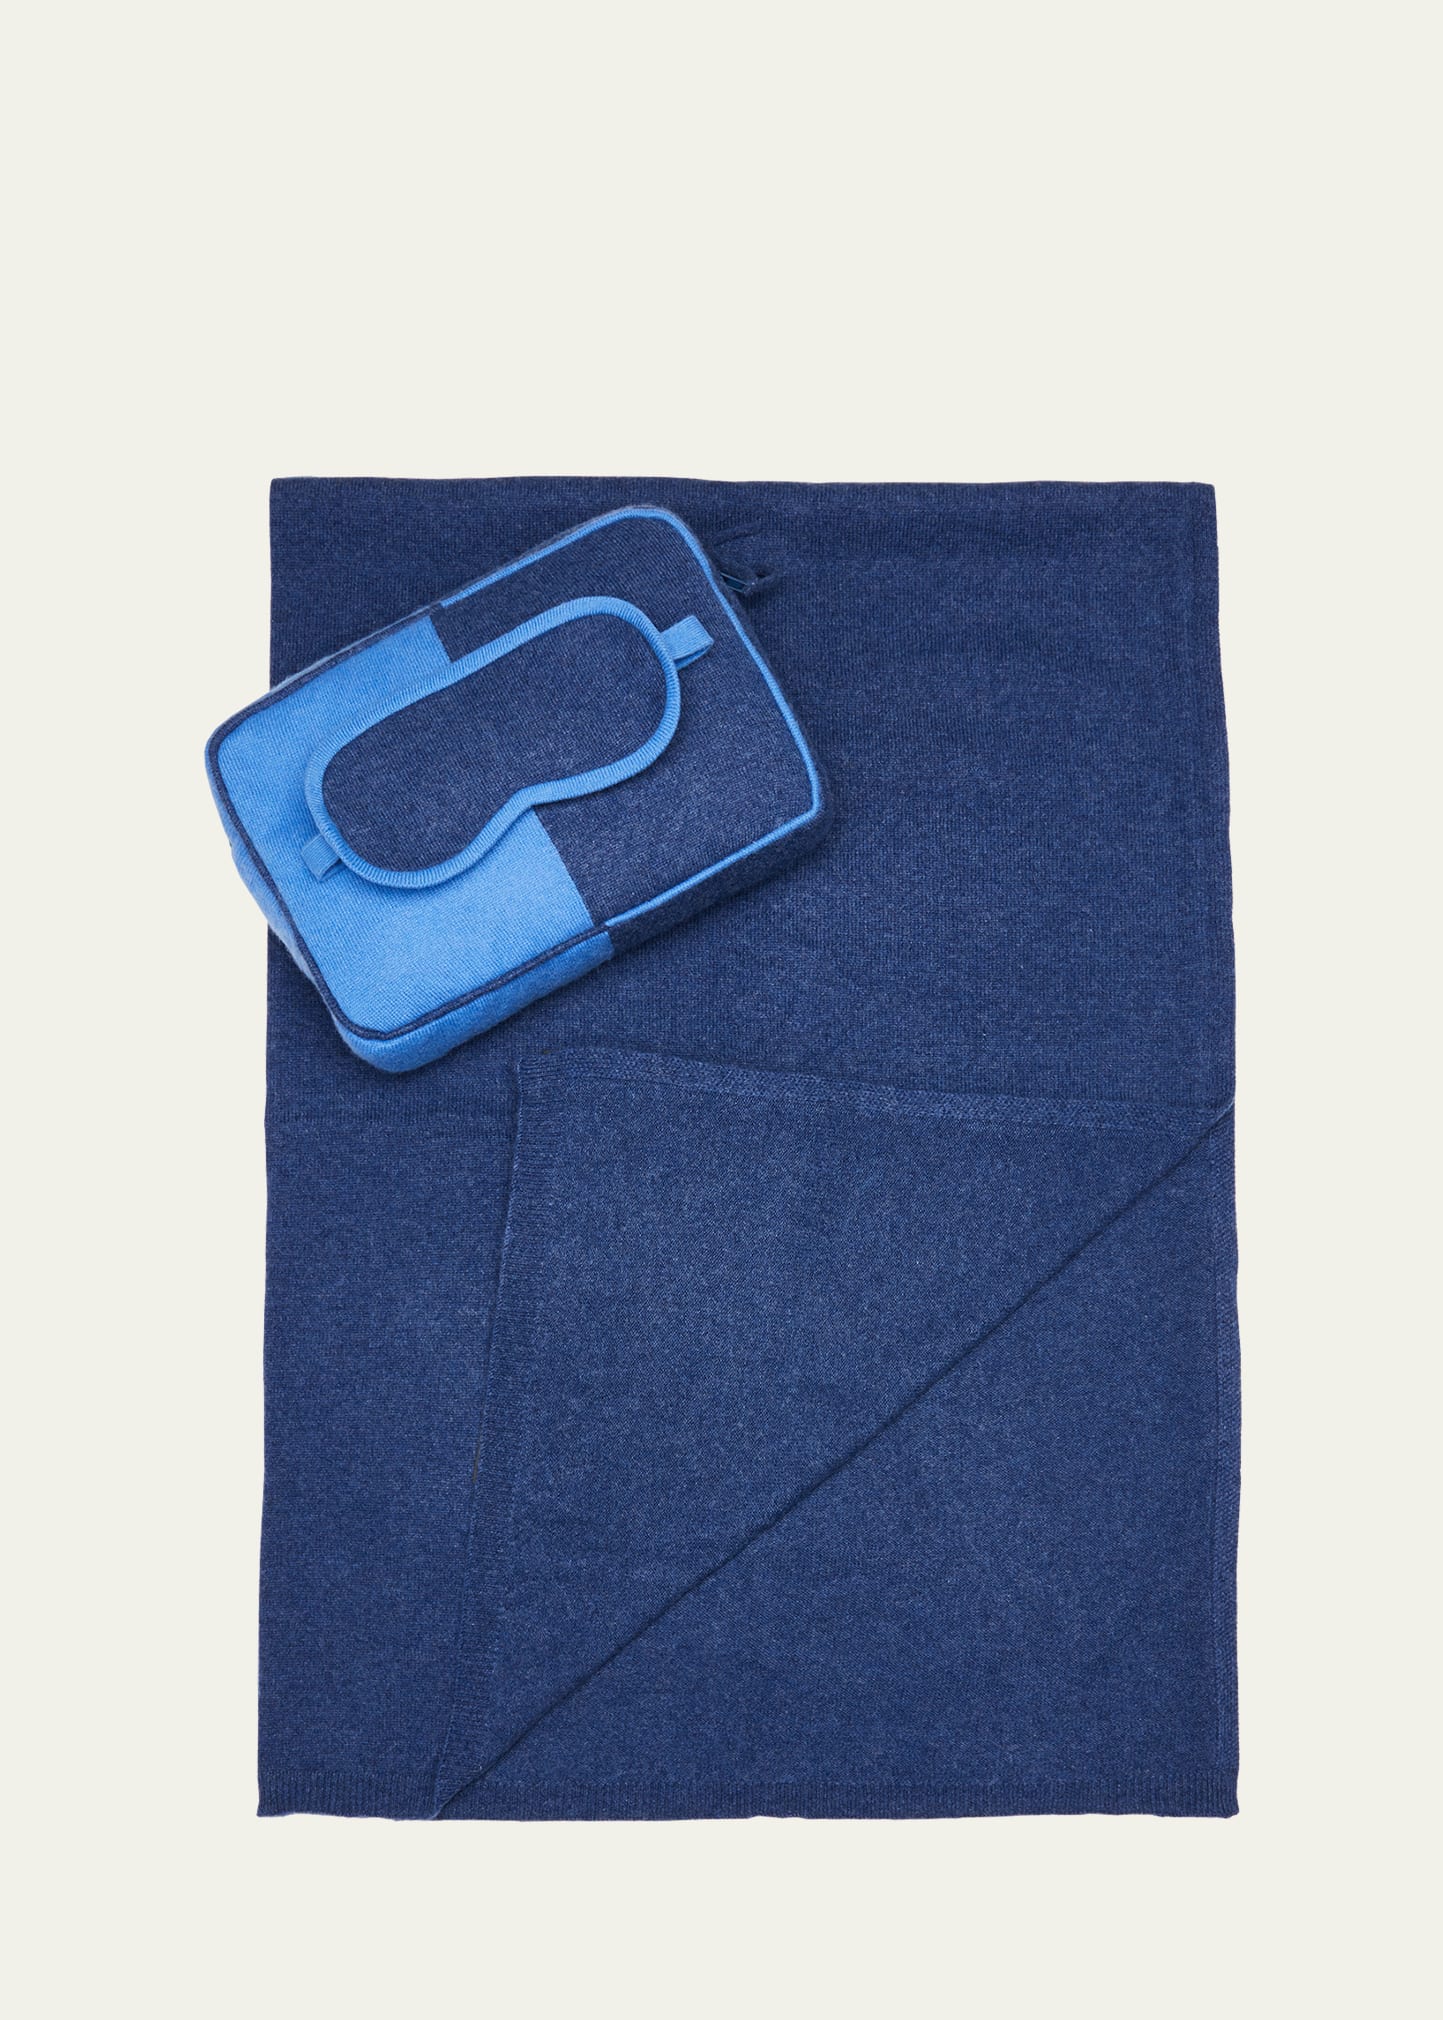 Sofia Cashmere Mondrian Colorblock Cashmere Travel Set In Light Blue/denim